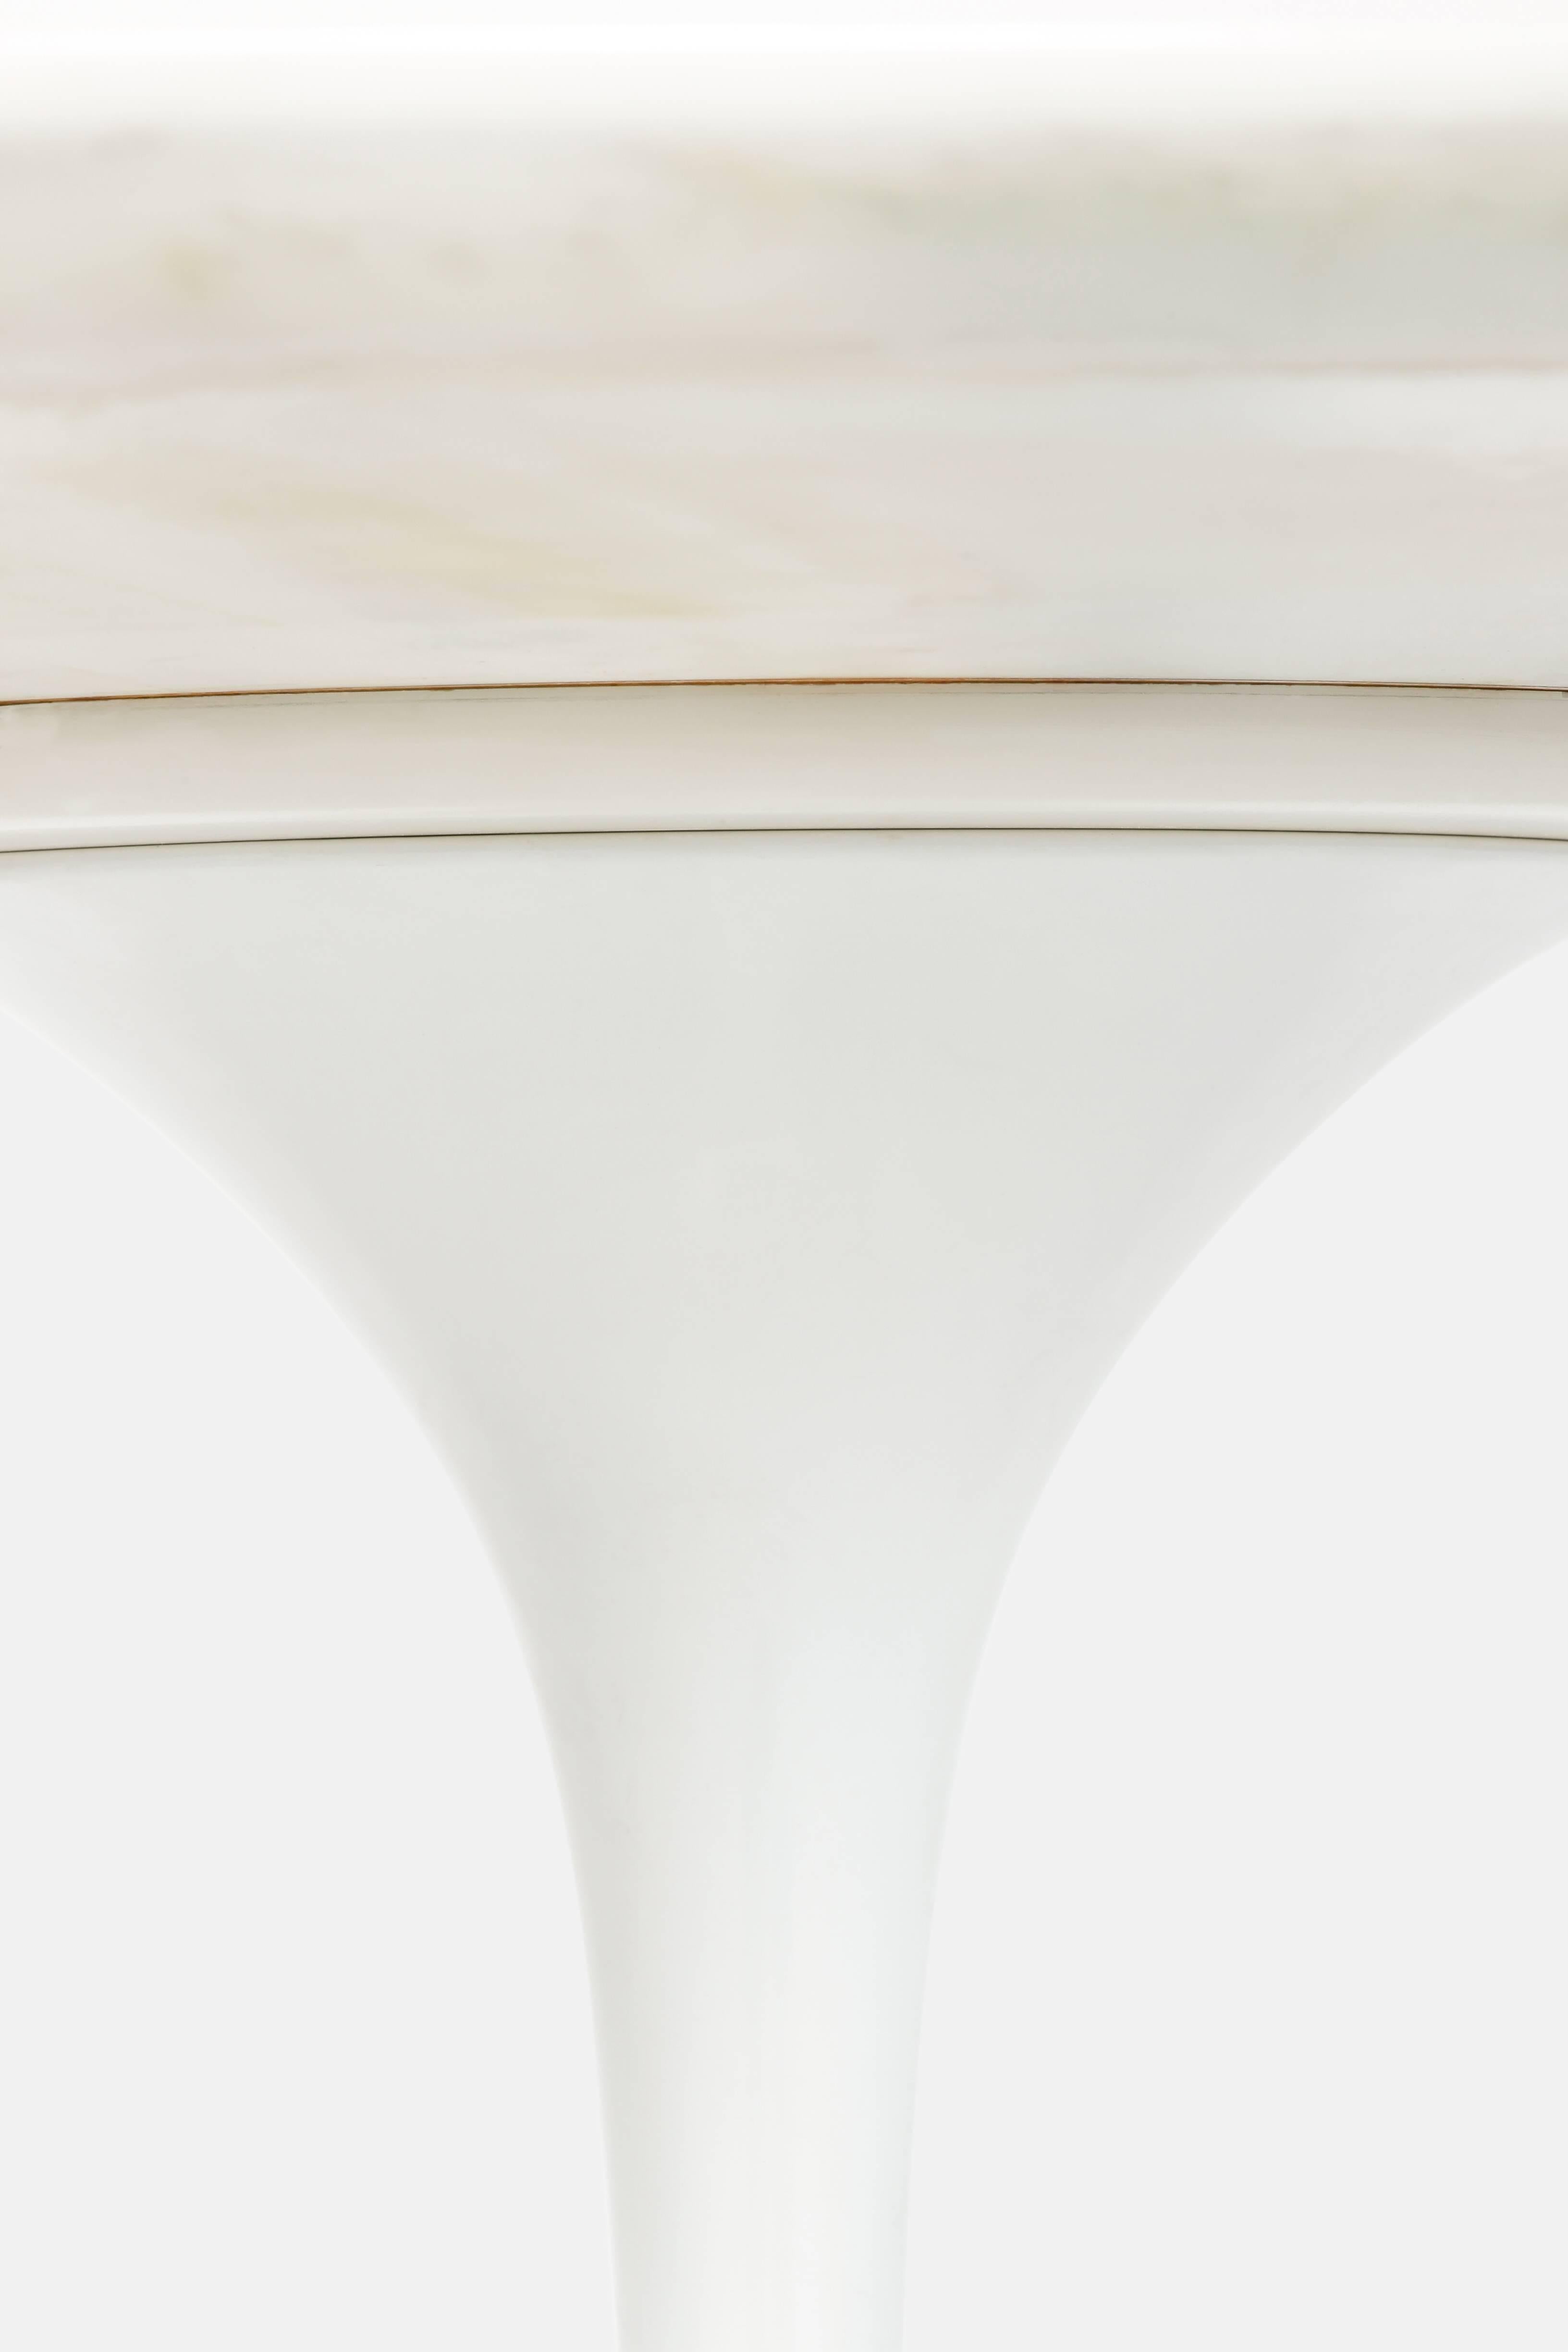 Eero Saarinen “Tulip” Marble Dining Table Knoll International, 1970s 1